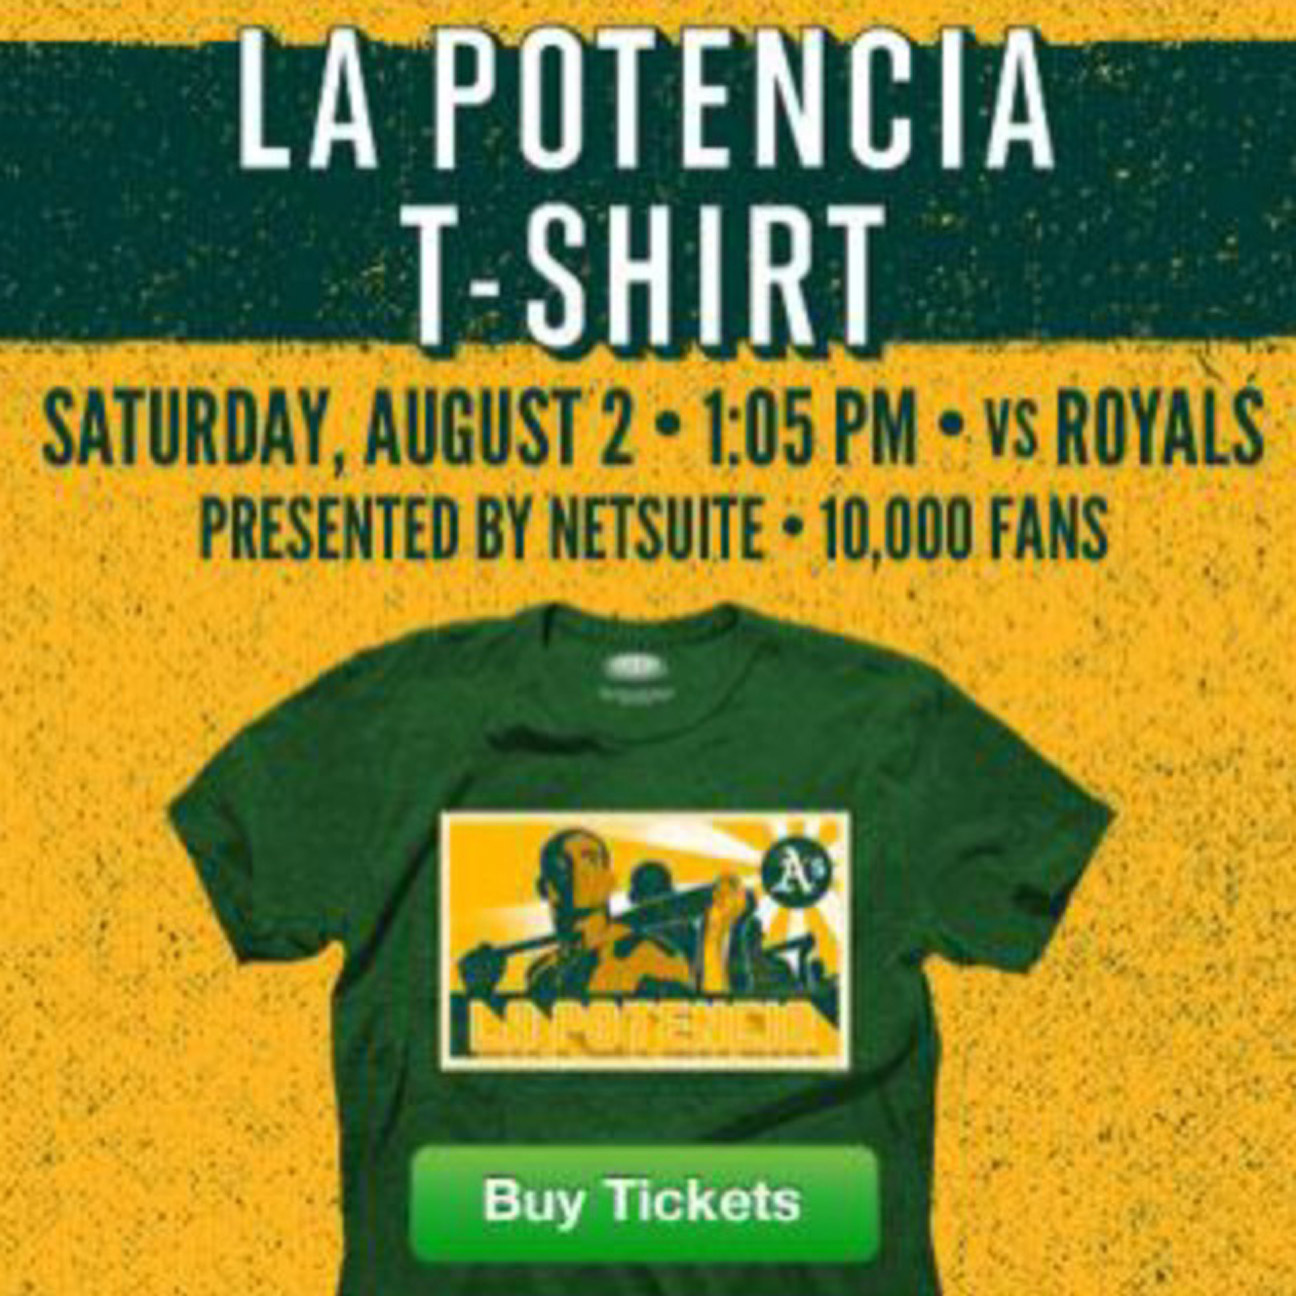 Oakland Athletics - Yoenis Cespedes “La Potencia” T-shirt giveaway